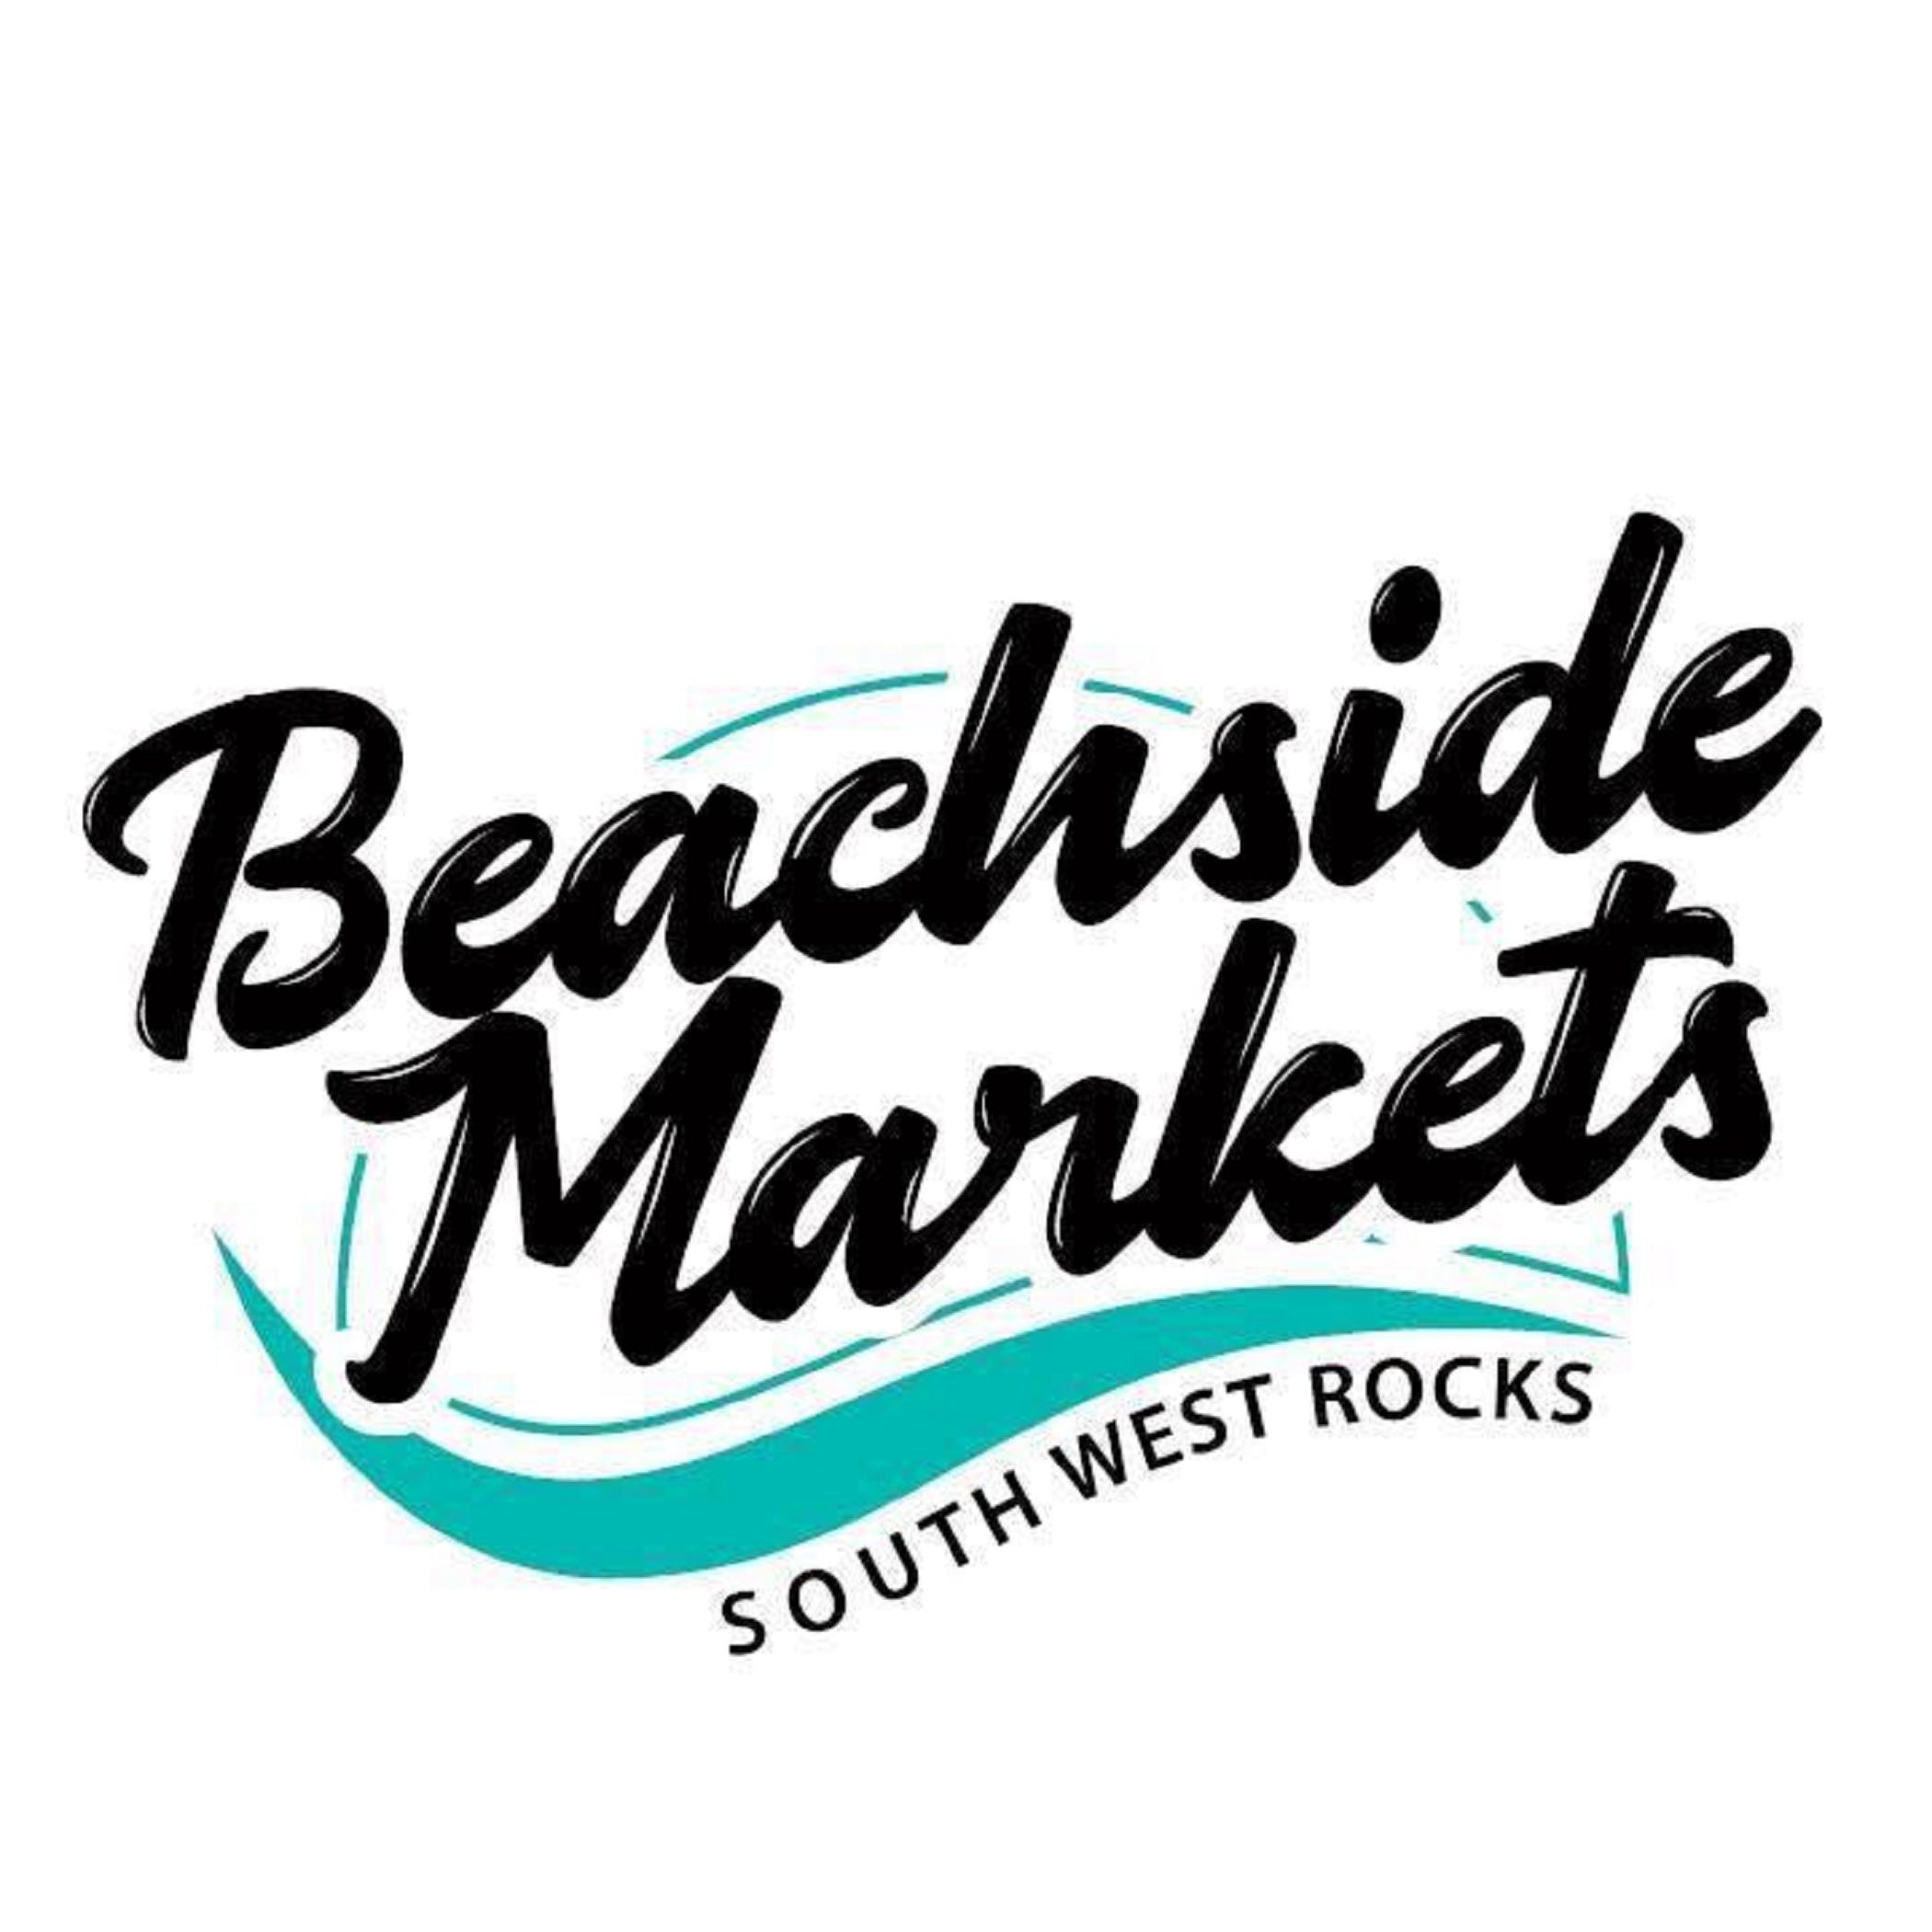 Beachside Markets South West Rocks - Geraldton Accommodation